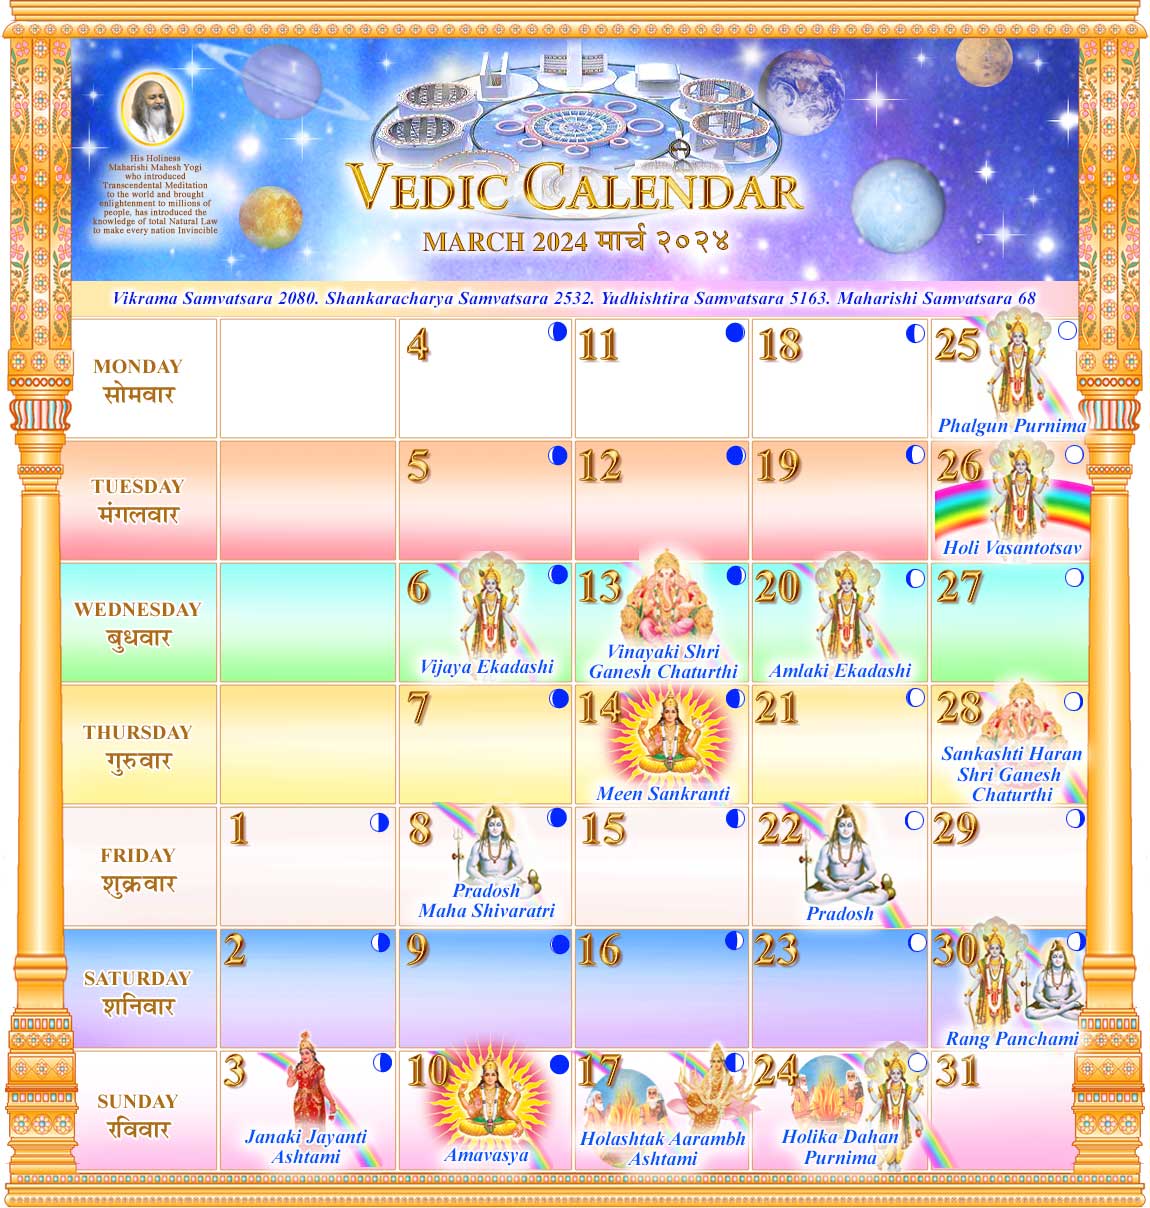 Vedic Calendar for March